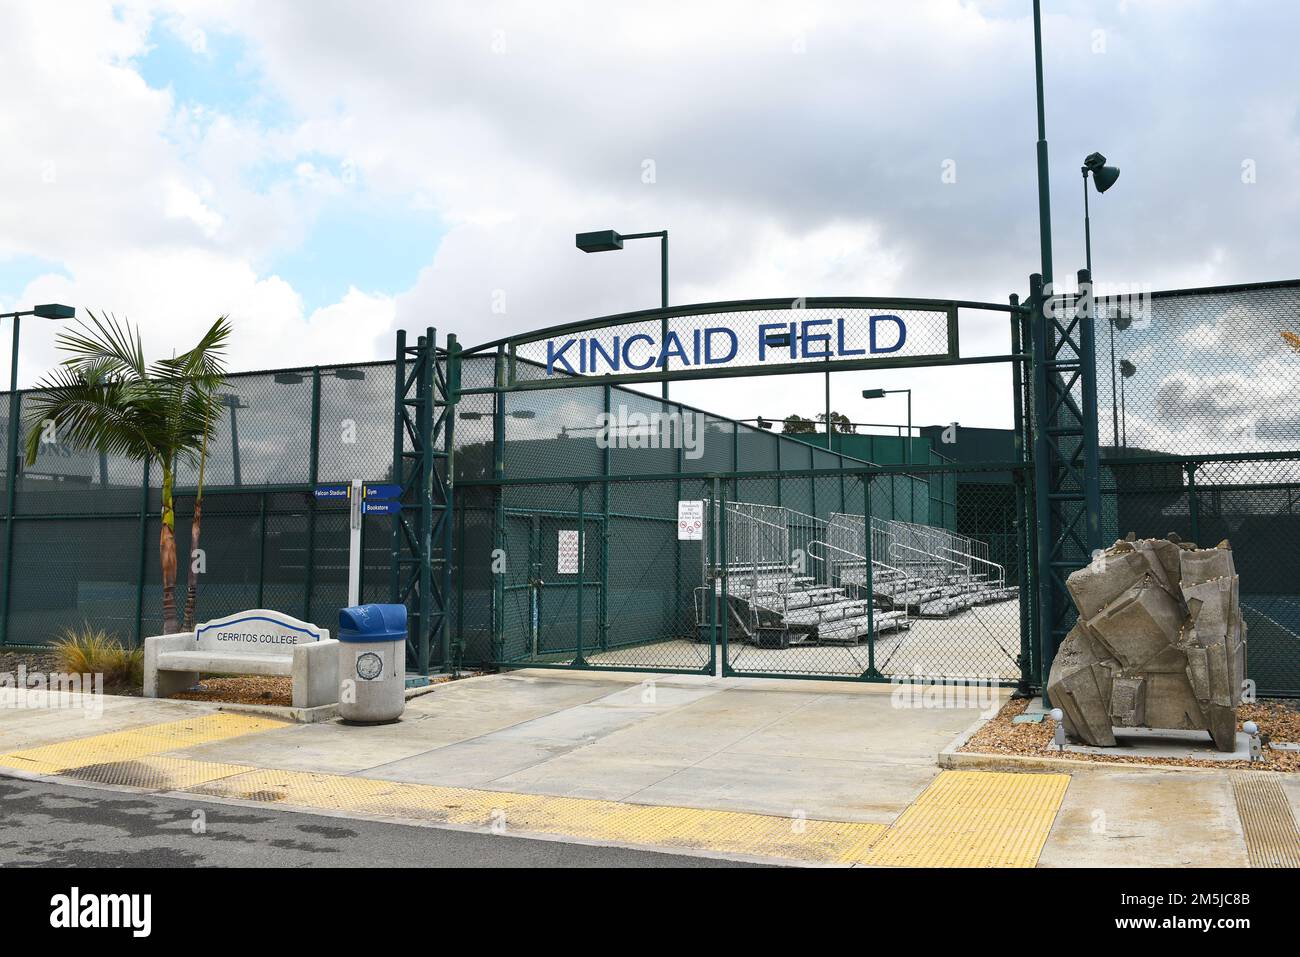 CERRITOS, CALIFORNIE - 28 DEC 2022: Kincaid Field sur le campus de Cerritos College Banque D'Images